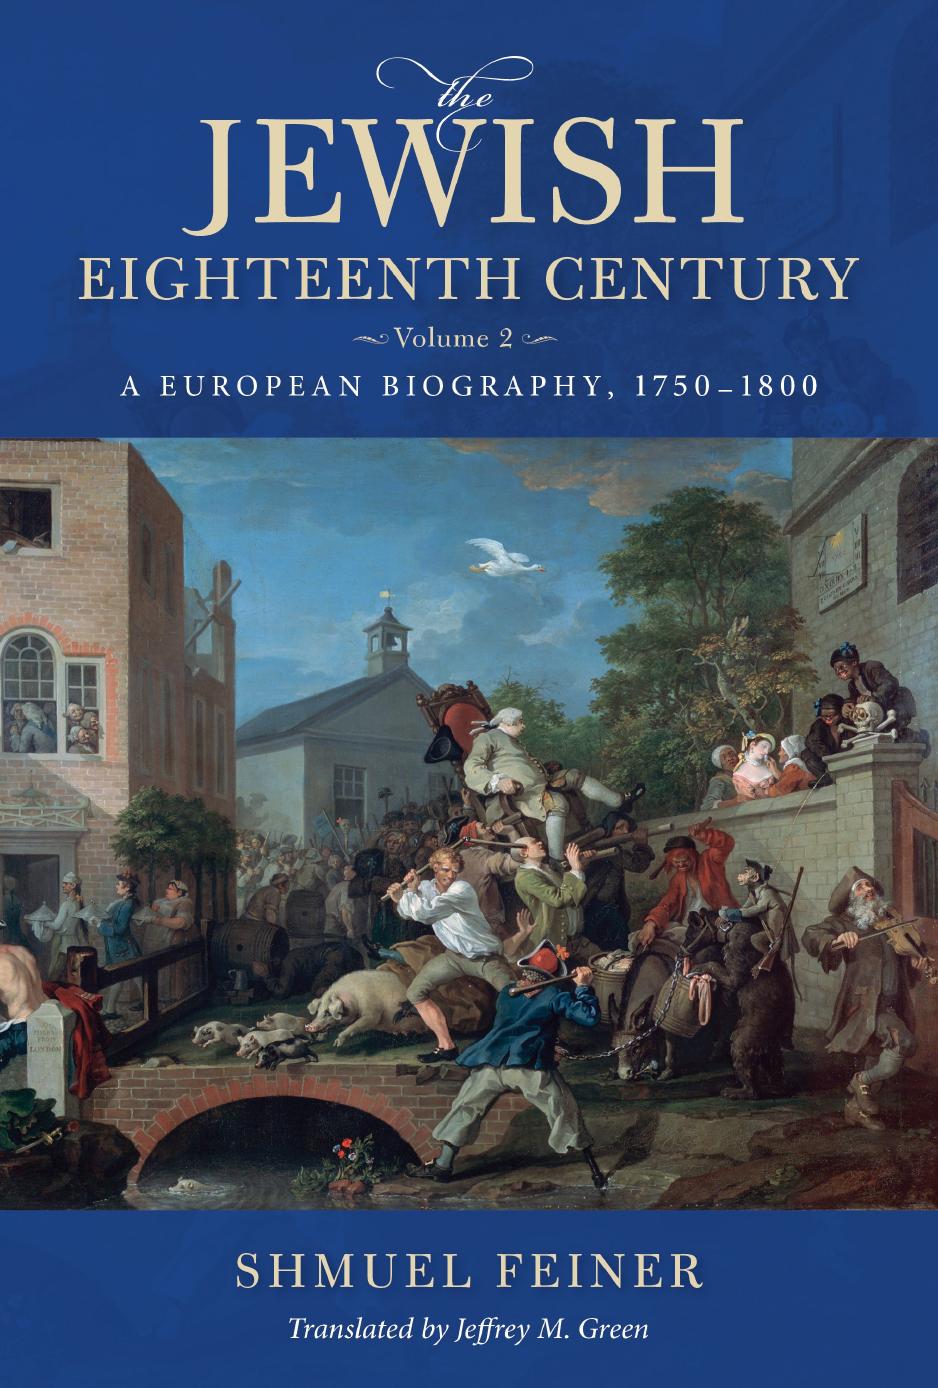 The Jewish Eighteenth Century, Volume 2: A European Biography, 1750â1800 by Shmuel Feiner